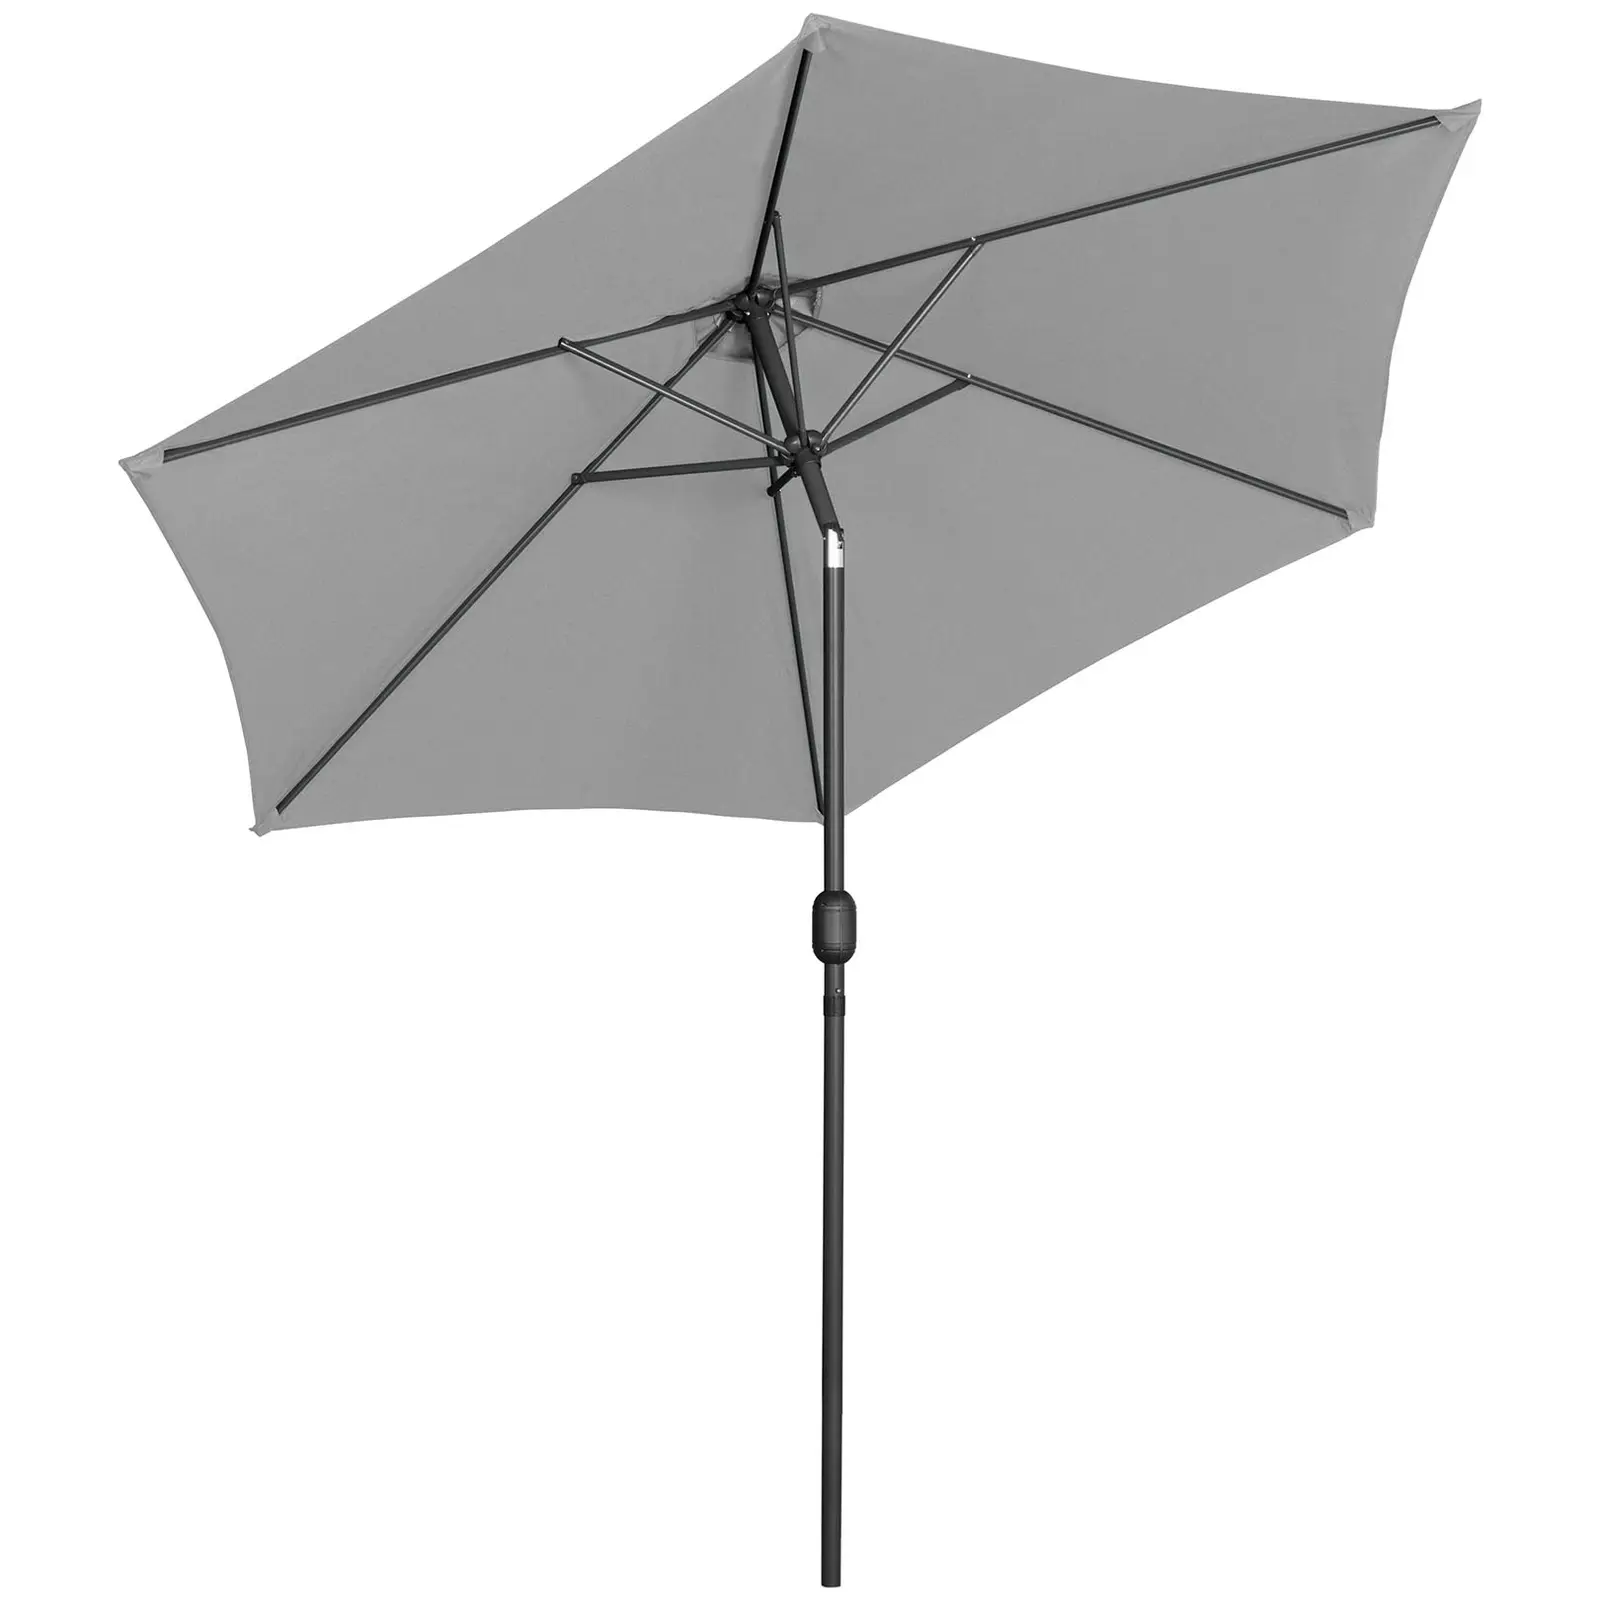 Parasoll stort - mörkgrå - sexkantigt - Ø 270 cm - fällbart